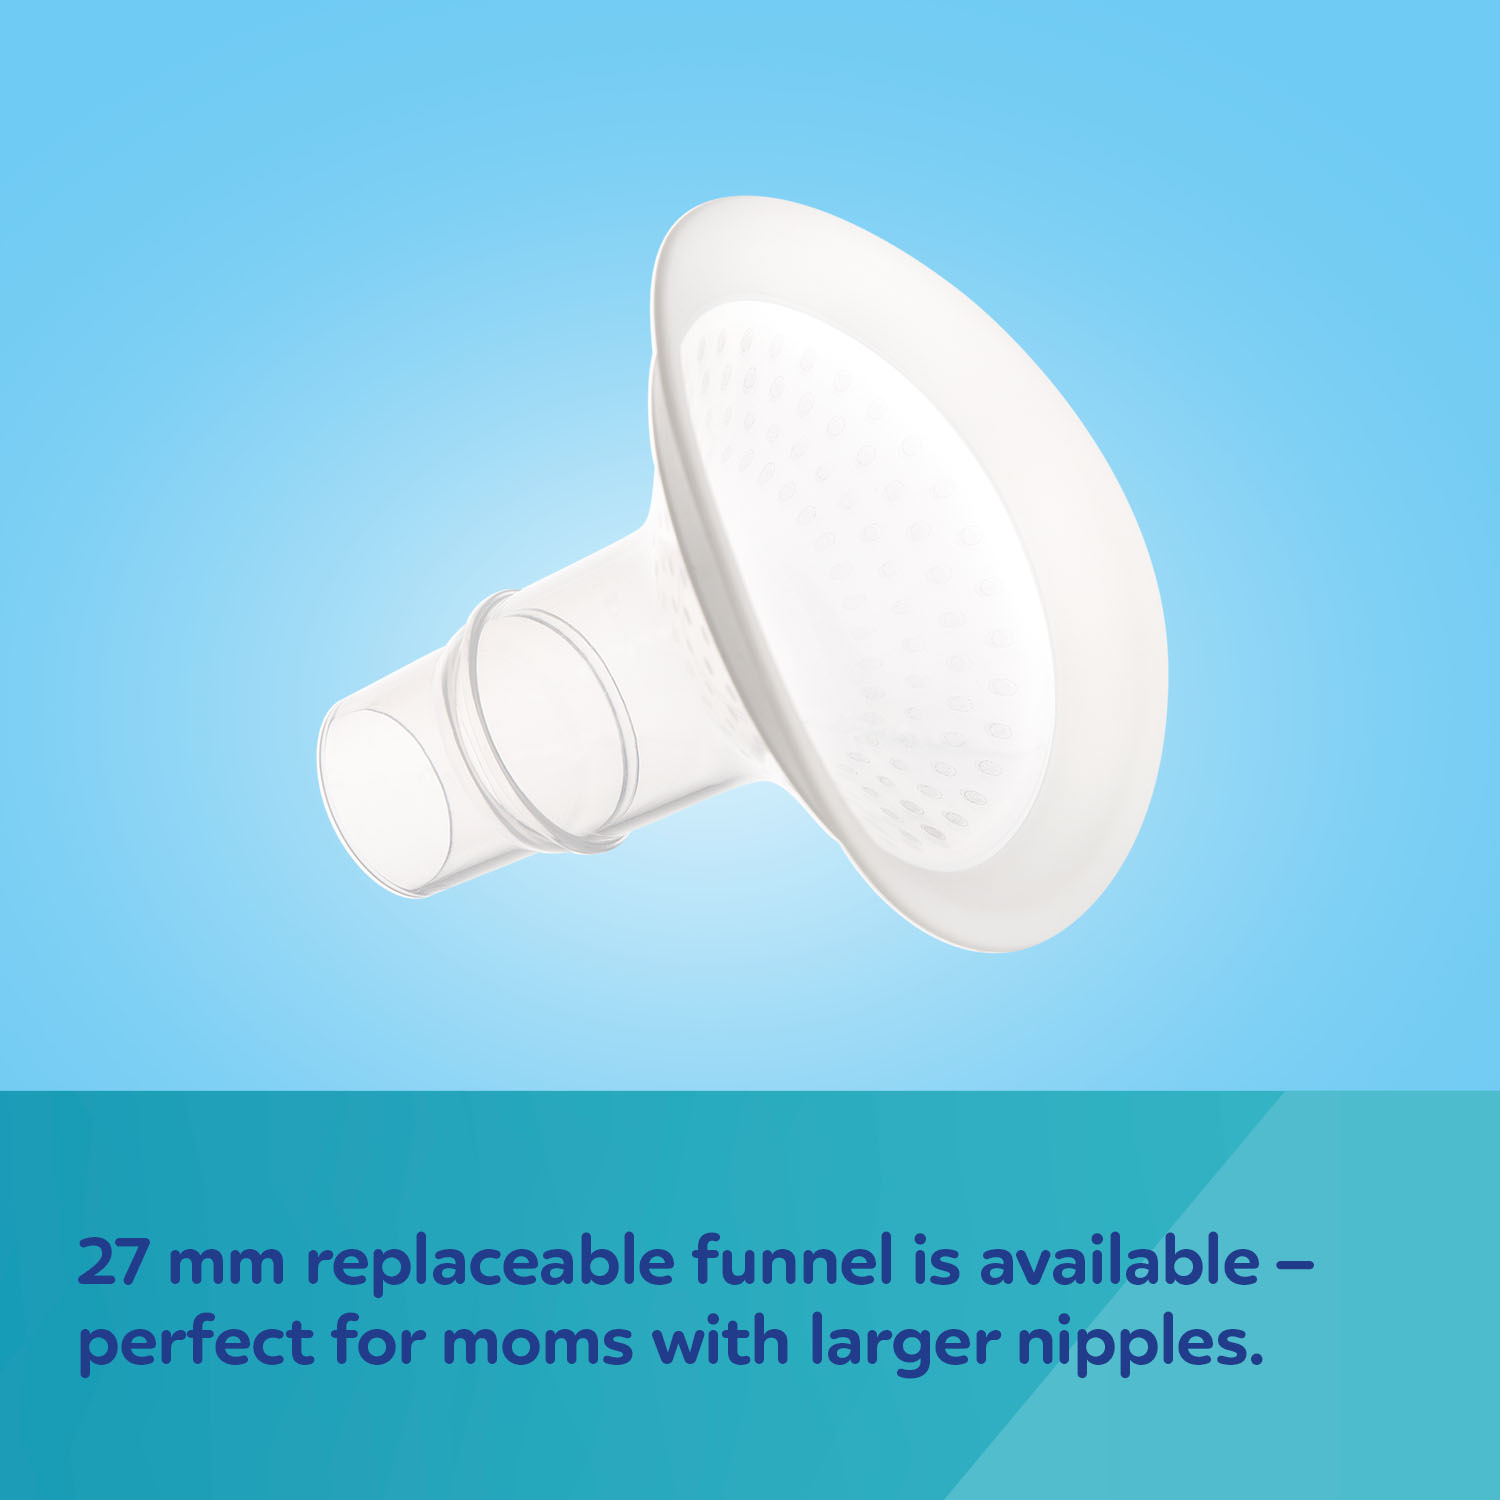 Canpol babies Electric Breast Pump EasyStart